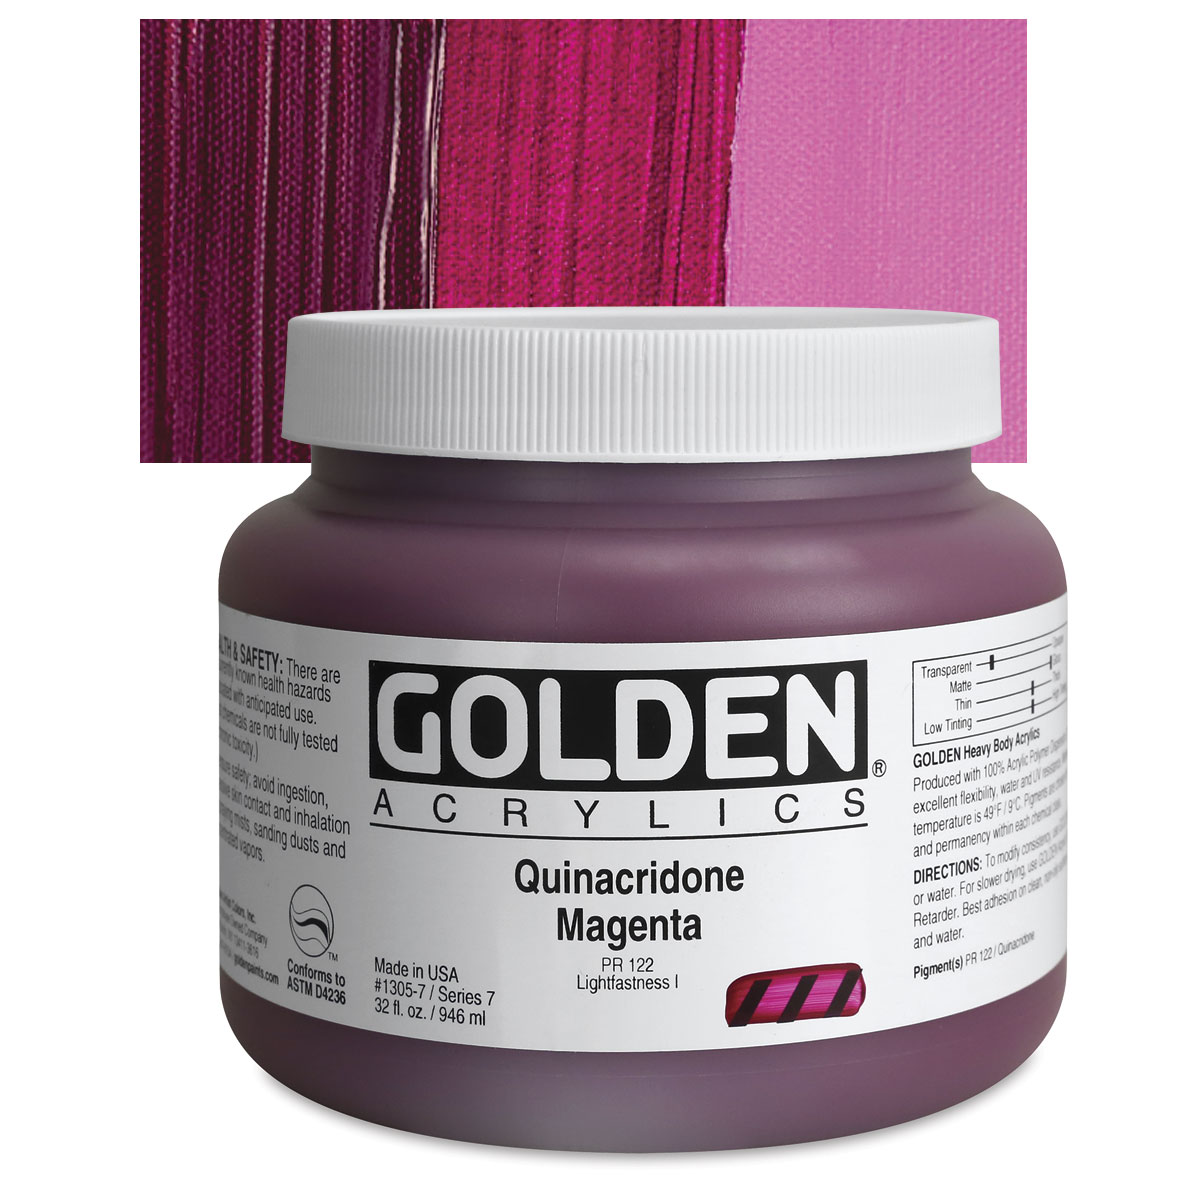 Golden Heavy Body Acrylic Paint, Quinacridone Magenta, 4 oz - The